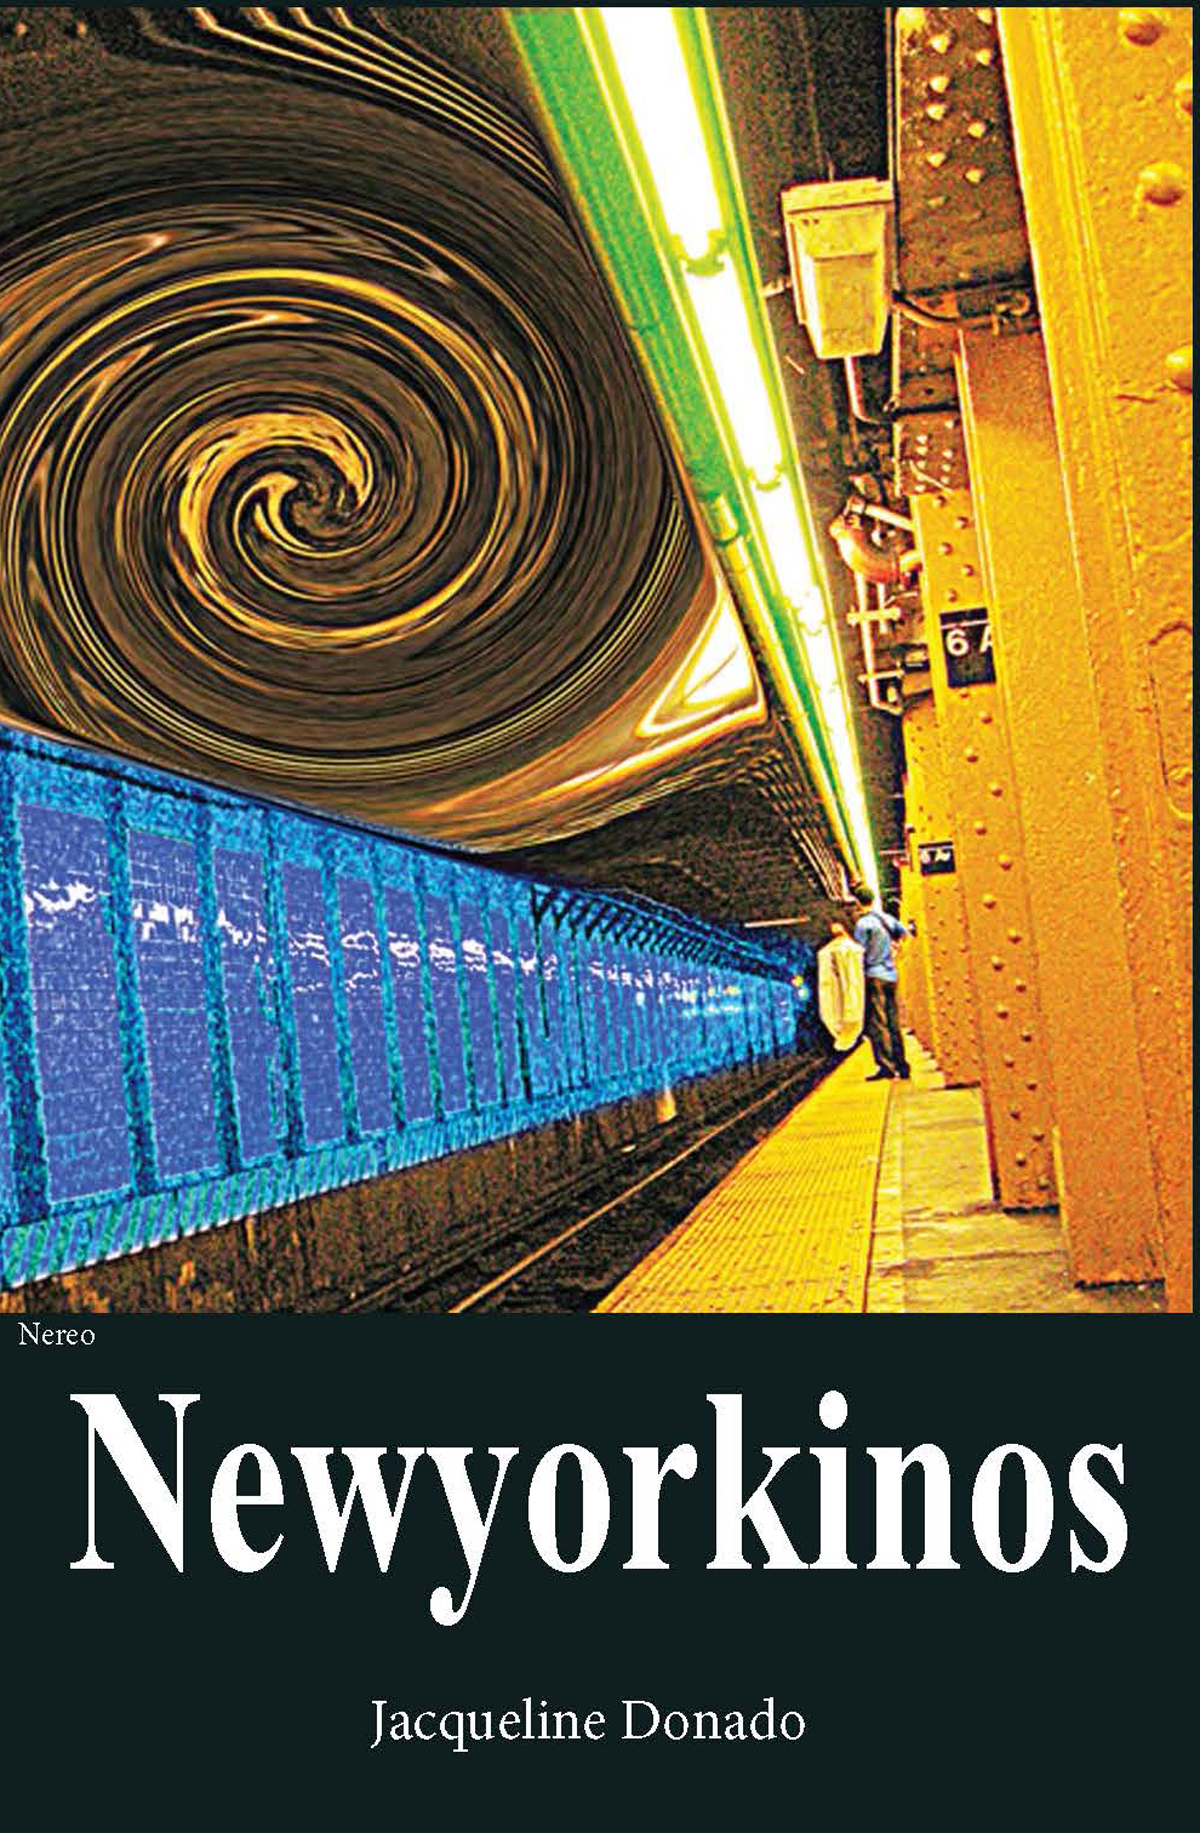 Libro Newyorkinos, imagén de portada de Nereo